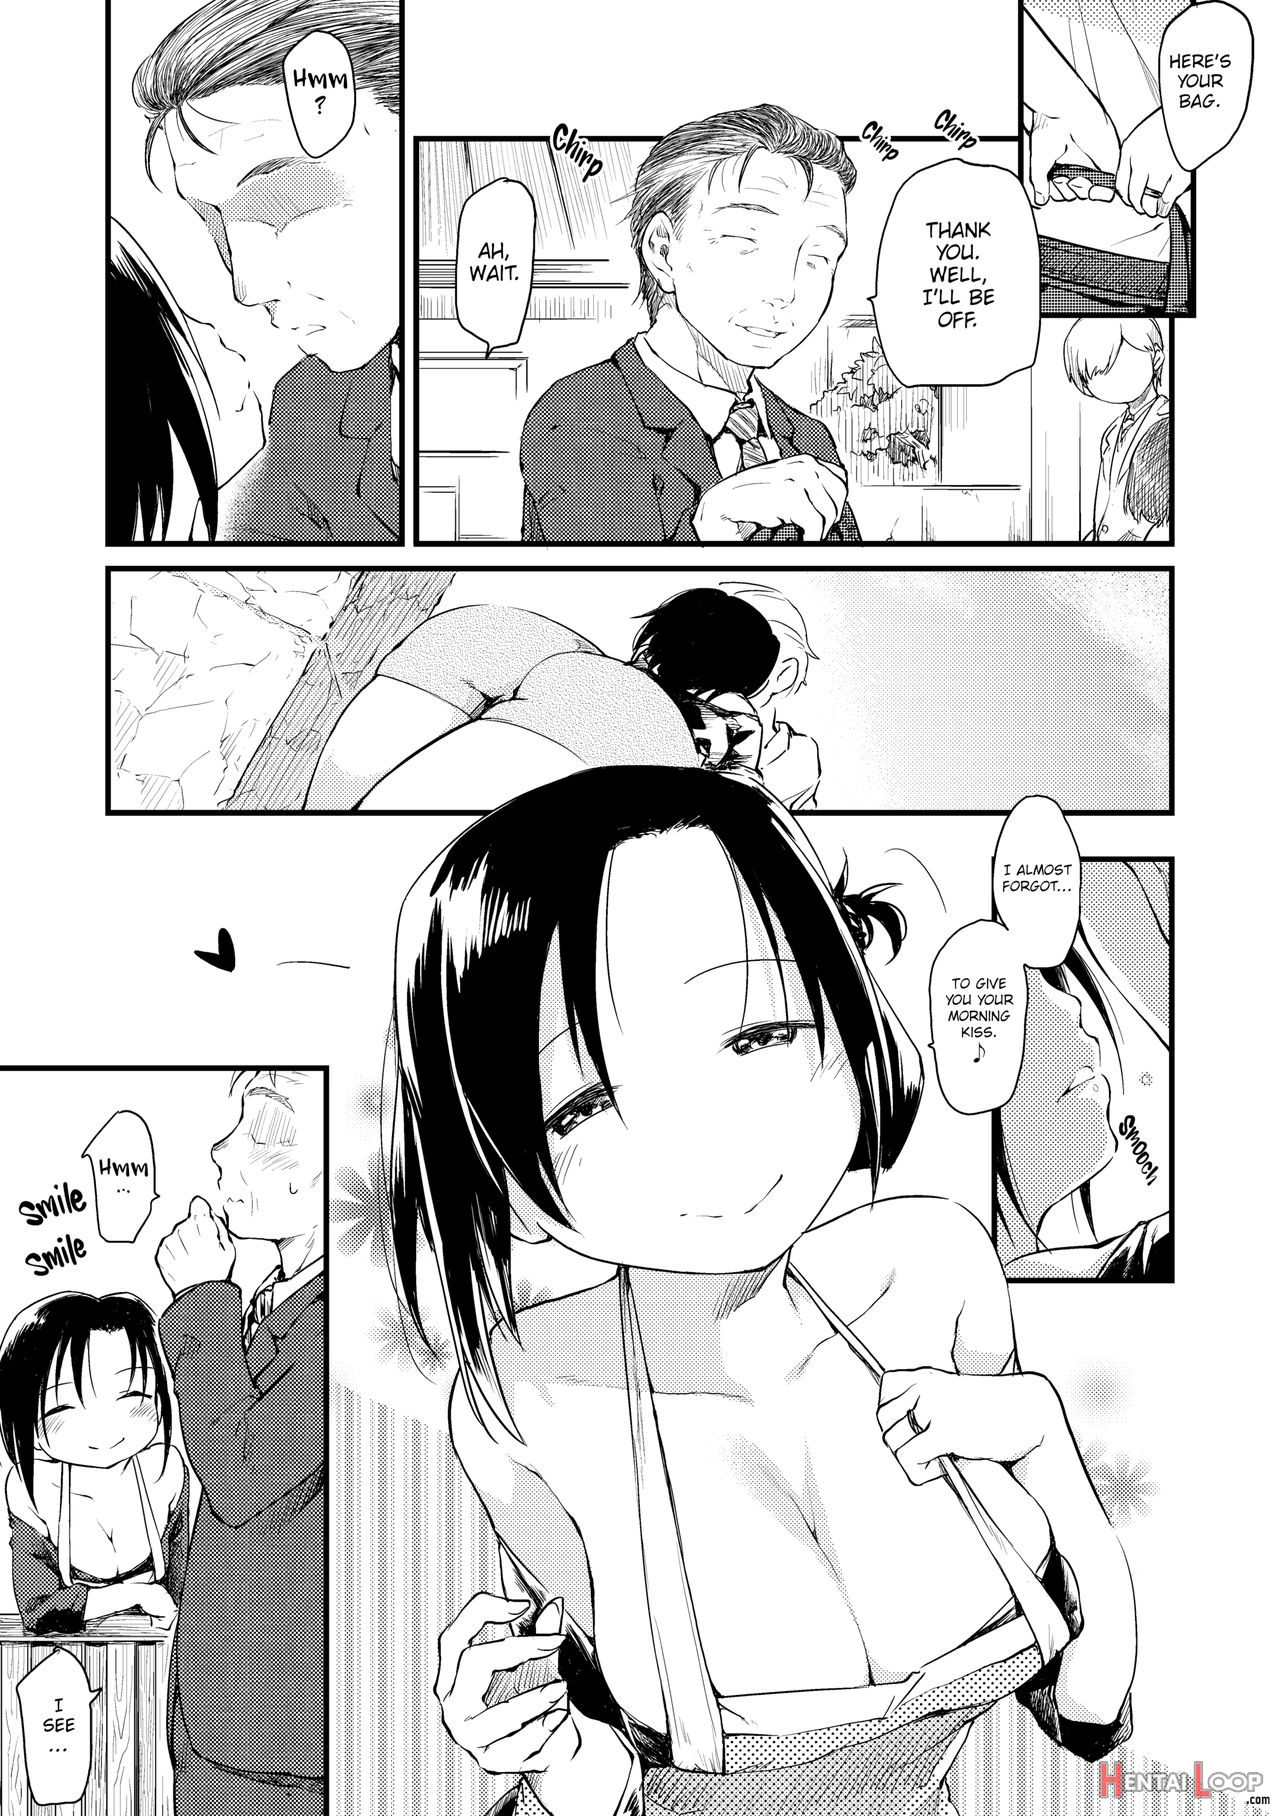 The Kutsura Family's Daily Sex Life page 4